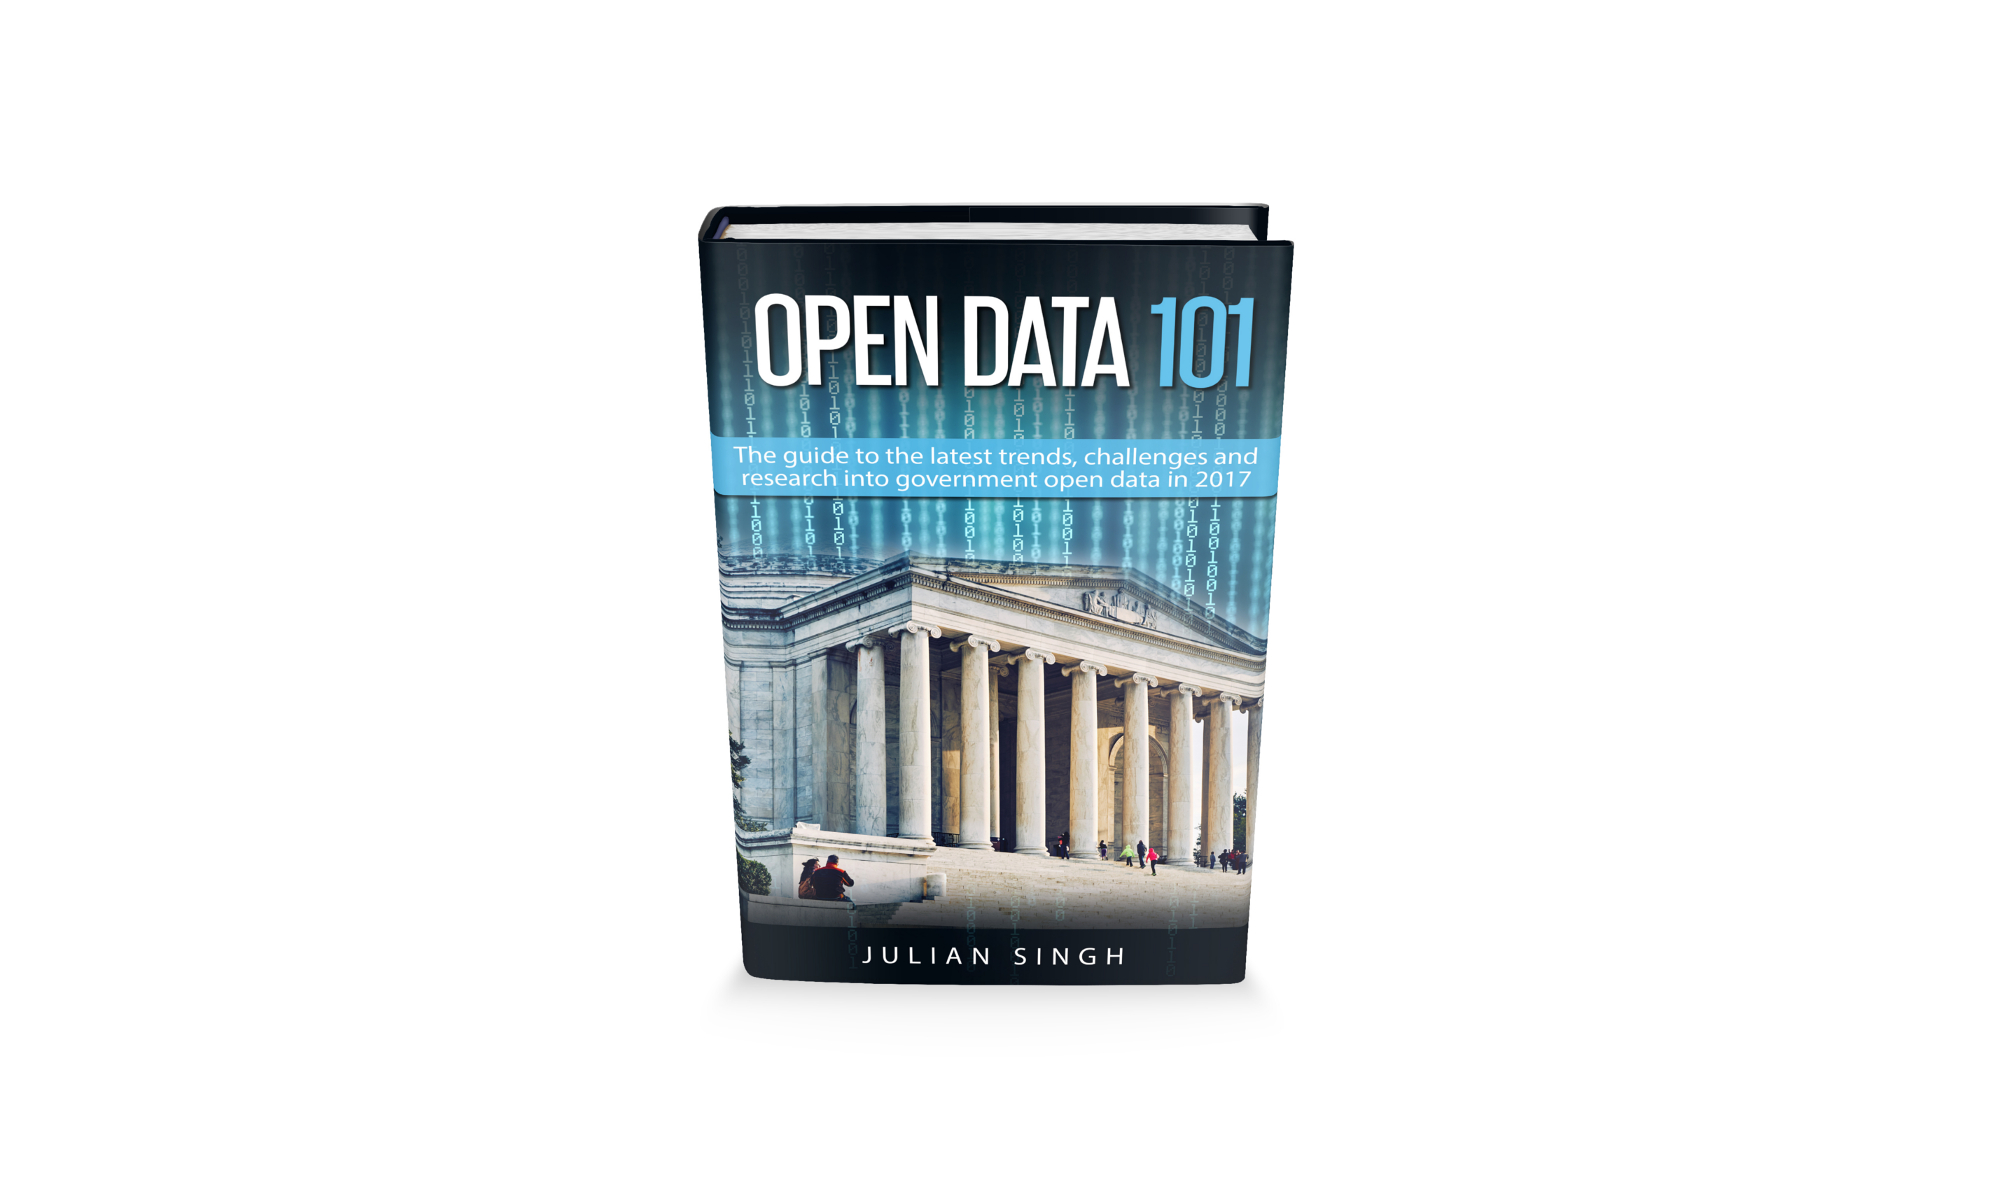 Open Data 101